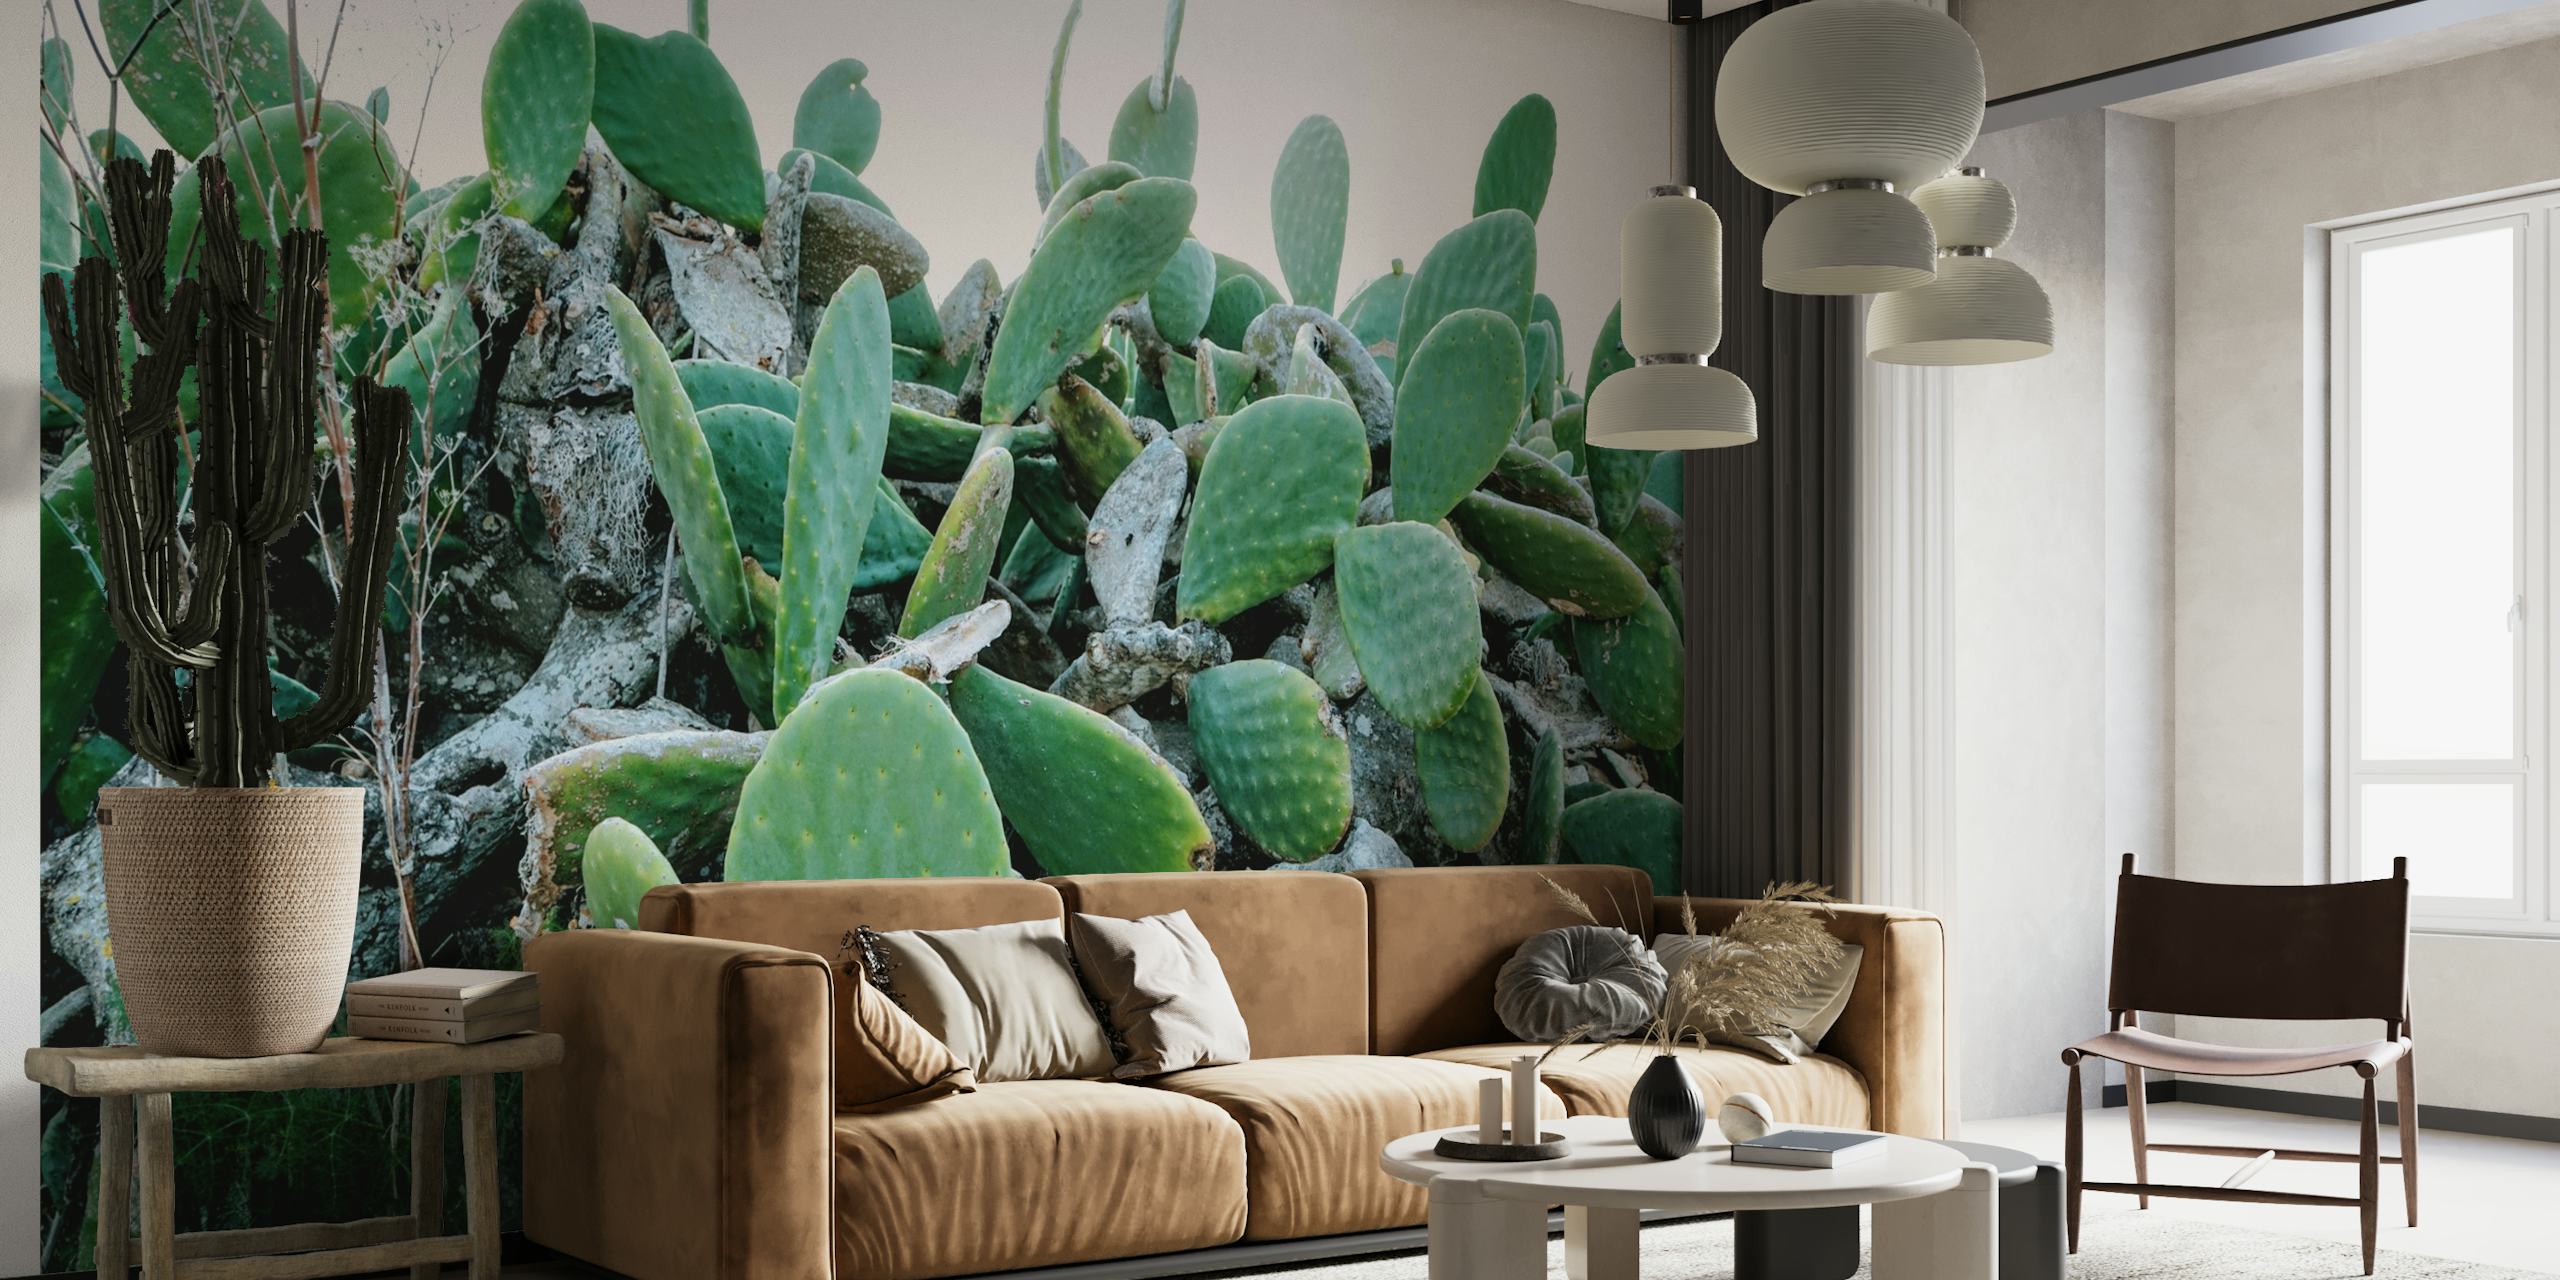 Zidna slika Vrtovi kaktusa sa živopisnim grozdovima kaktusa